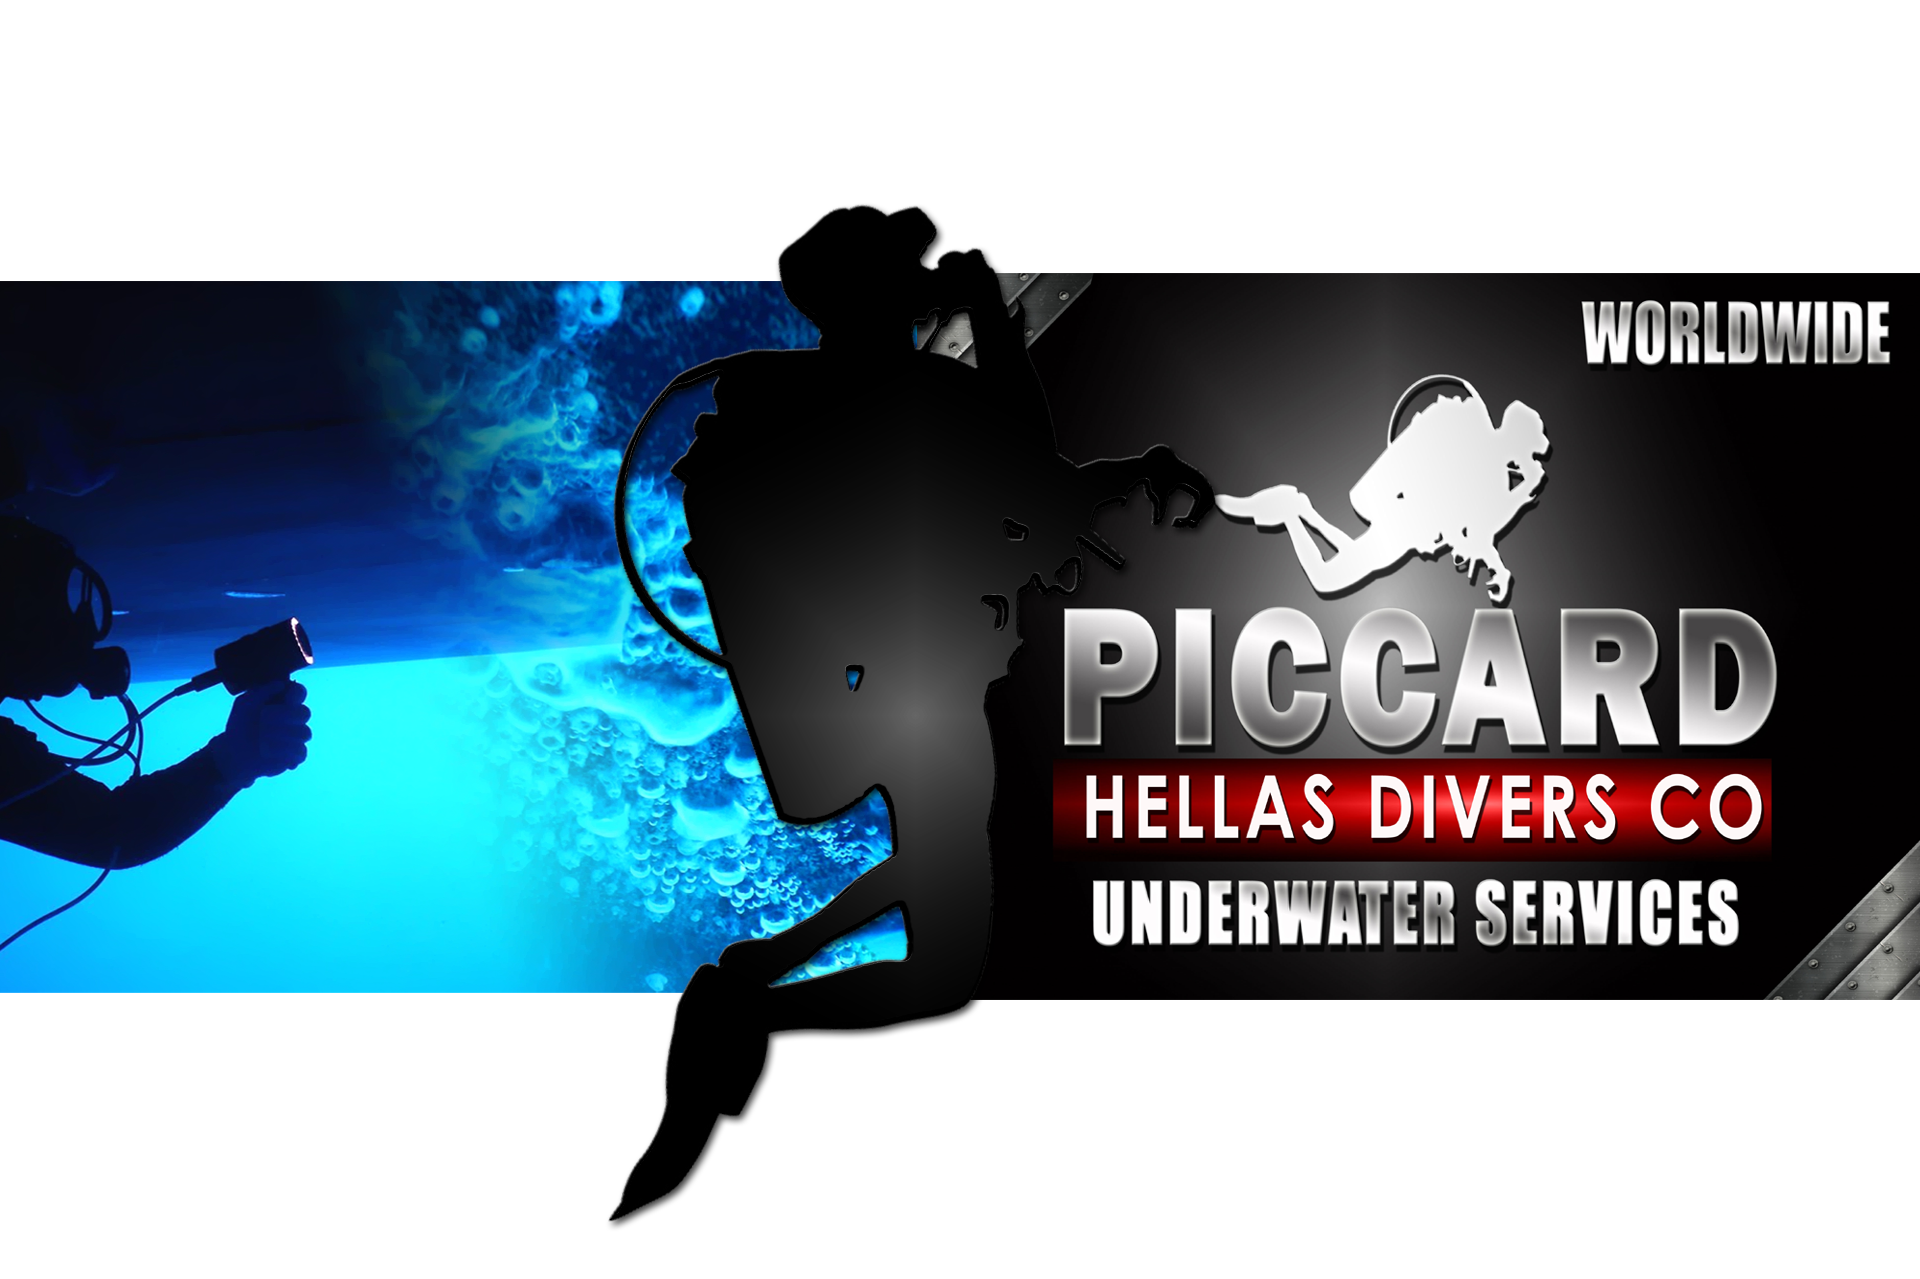 diver & logo image